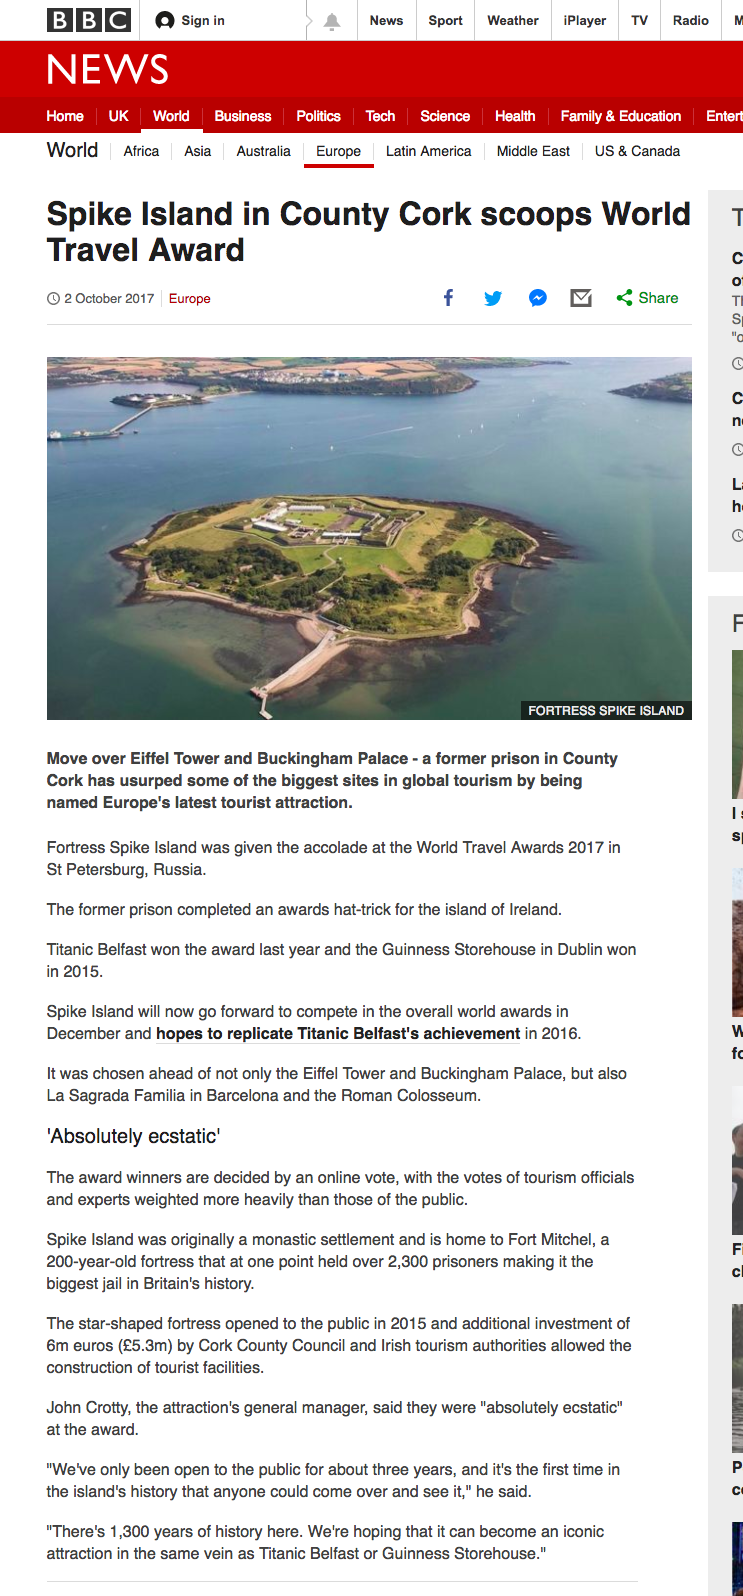 Spike Island in County Cork scoops World Travel Award